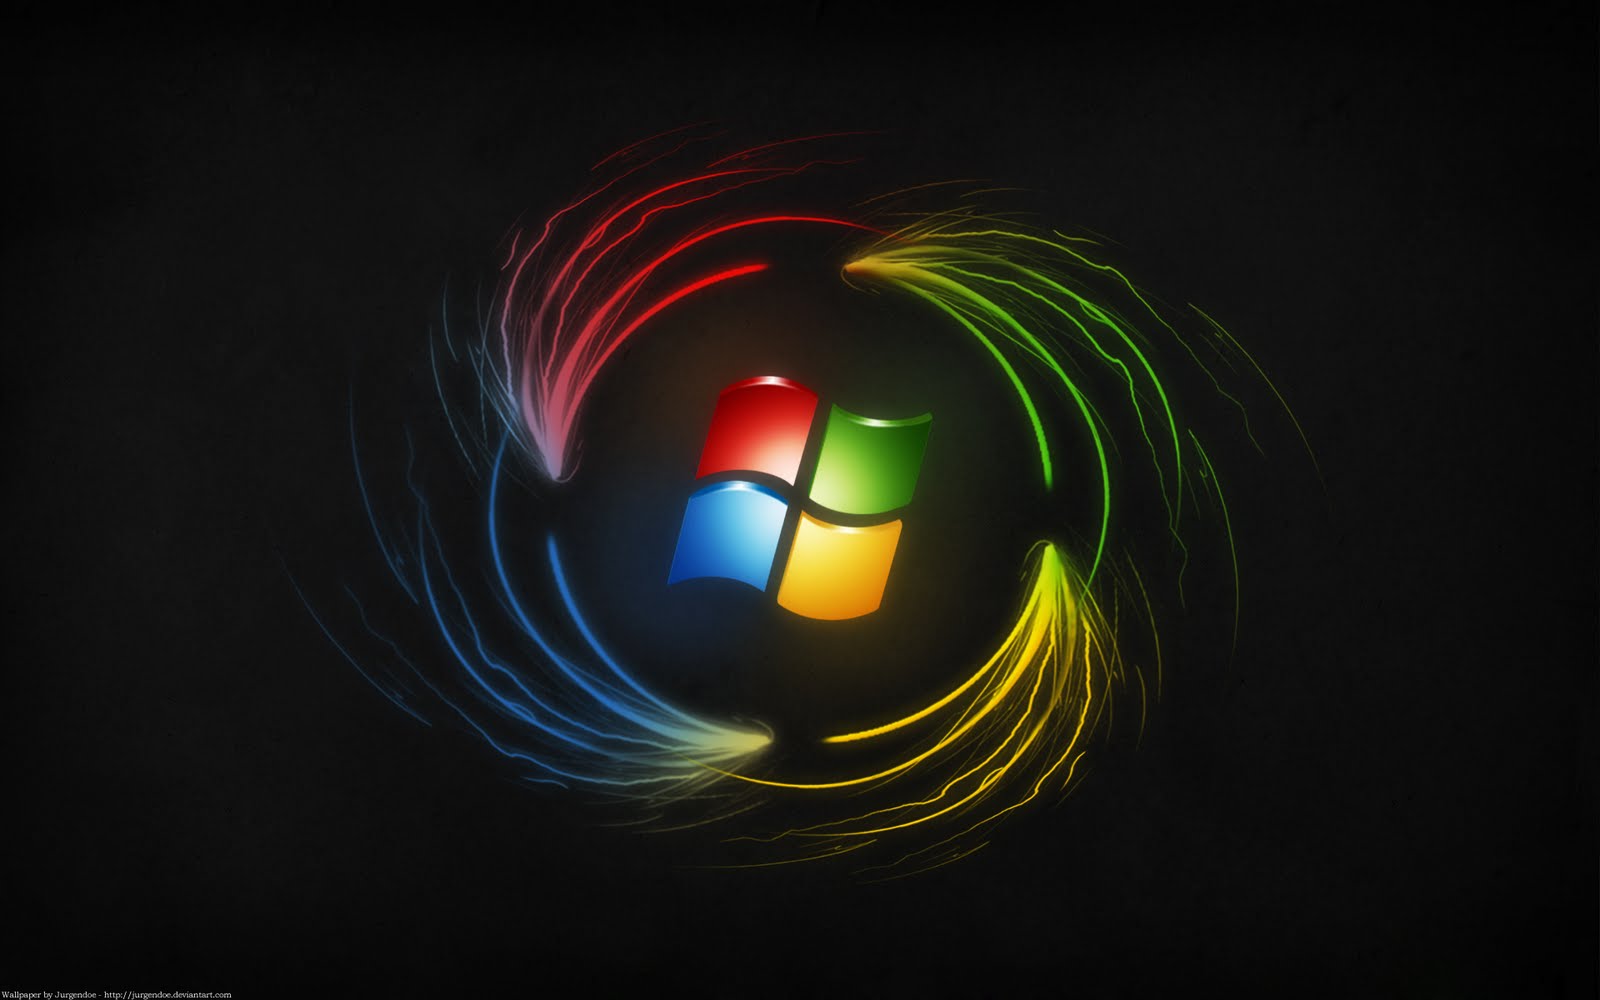 Desktop Wallpapers Download: Windows 7 ultimate collection wallpaper